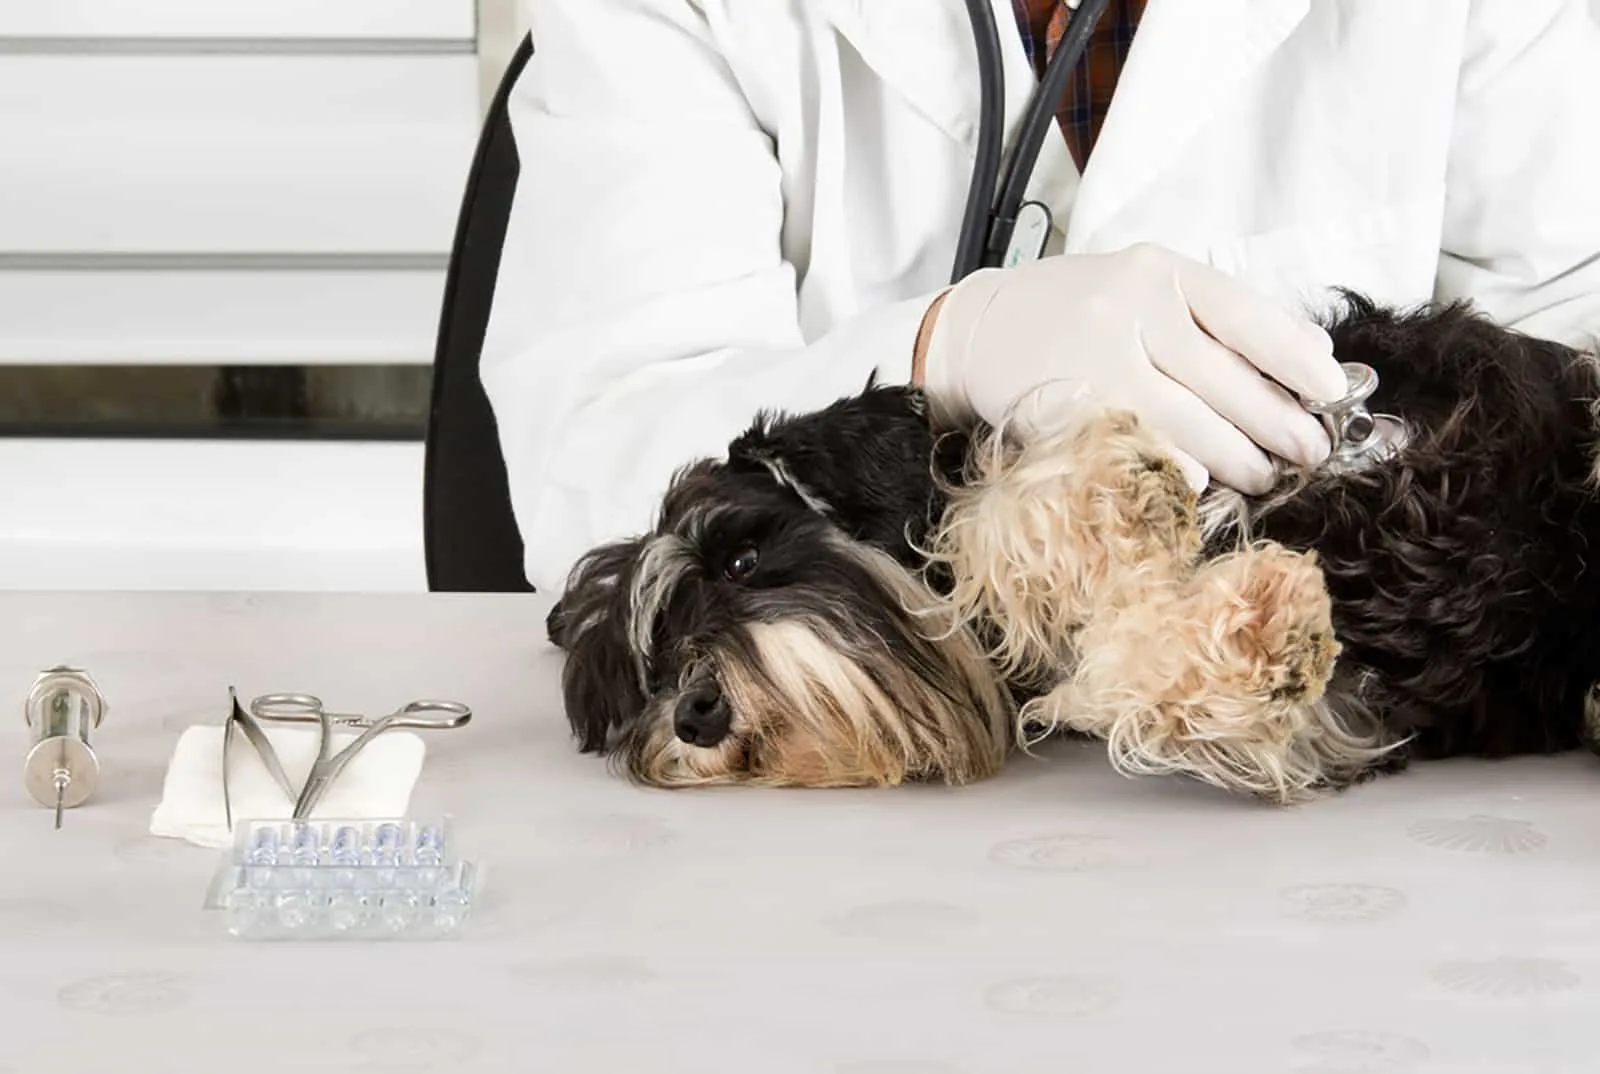 veterinarian examining miniature schnauzerwith stethoscope on table